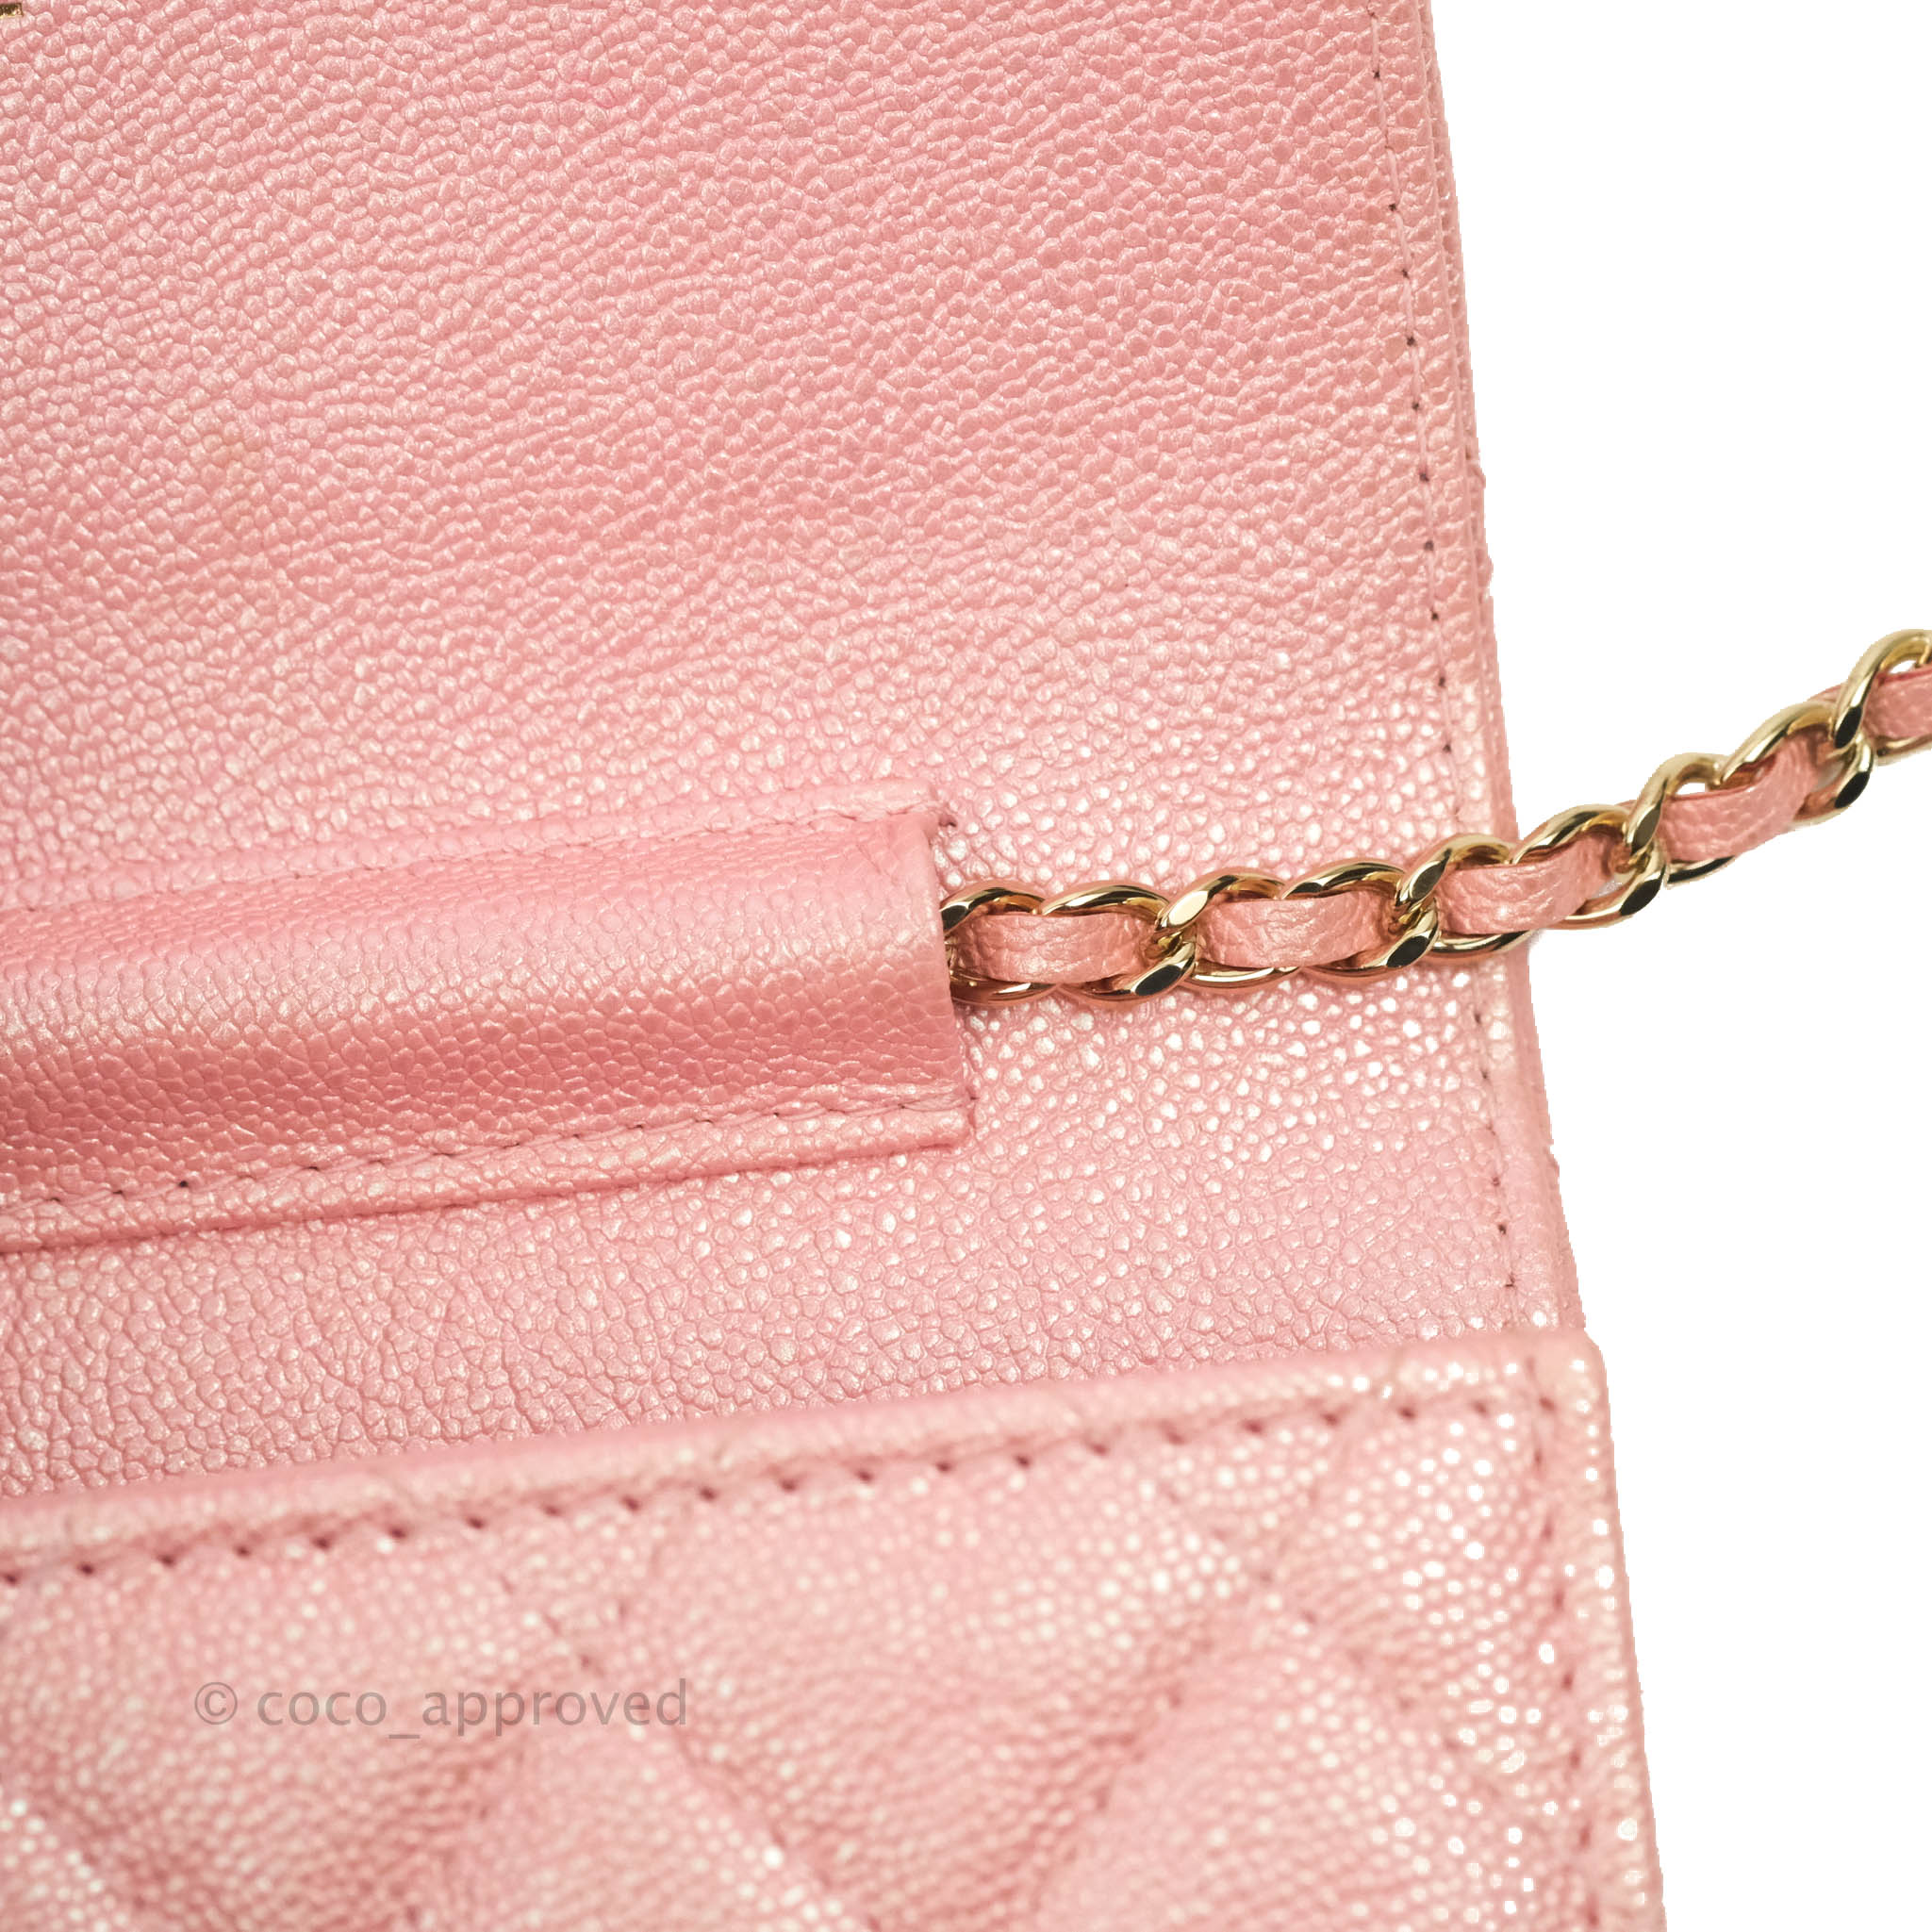 Chanel Fuchsia Pink Caviar Classic WOC Wallet on Chain Flap Bag